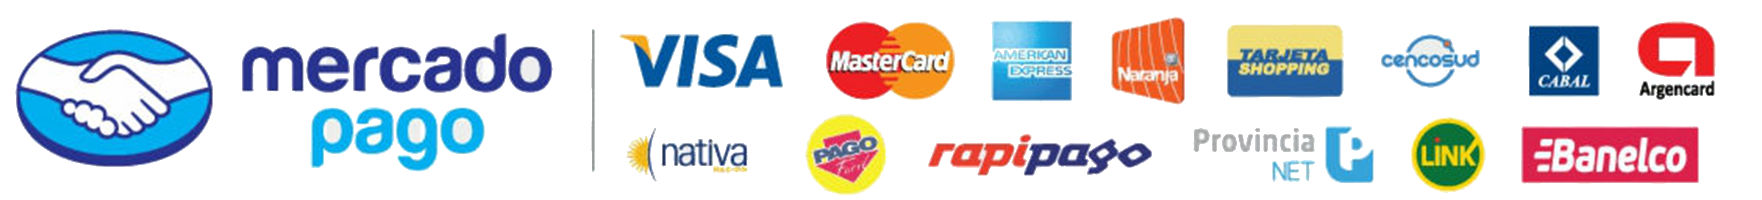 Cards enabled in Mercado Pago